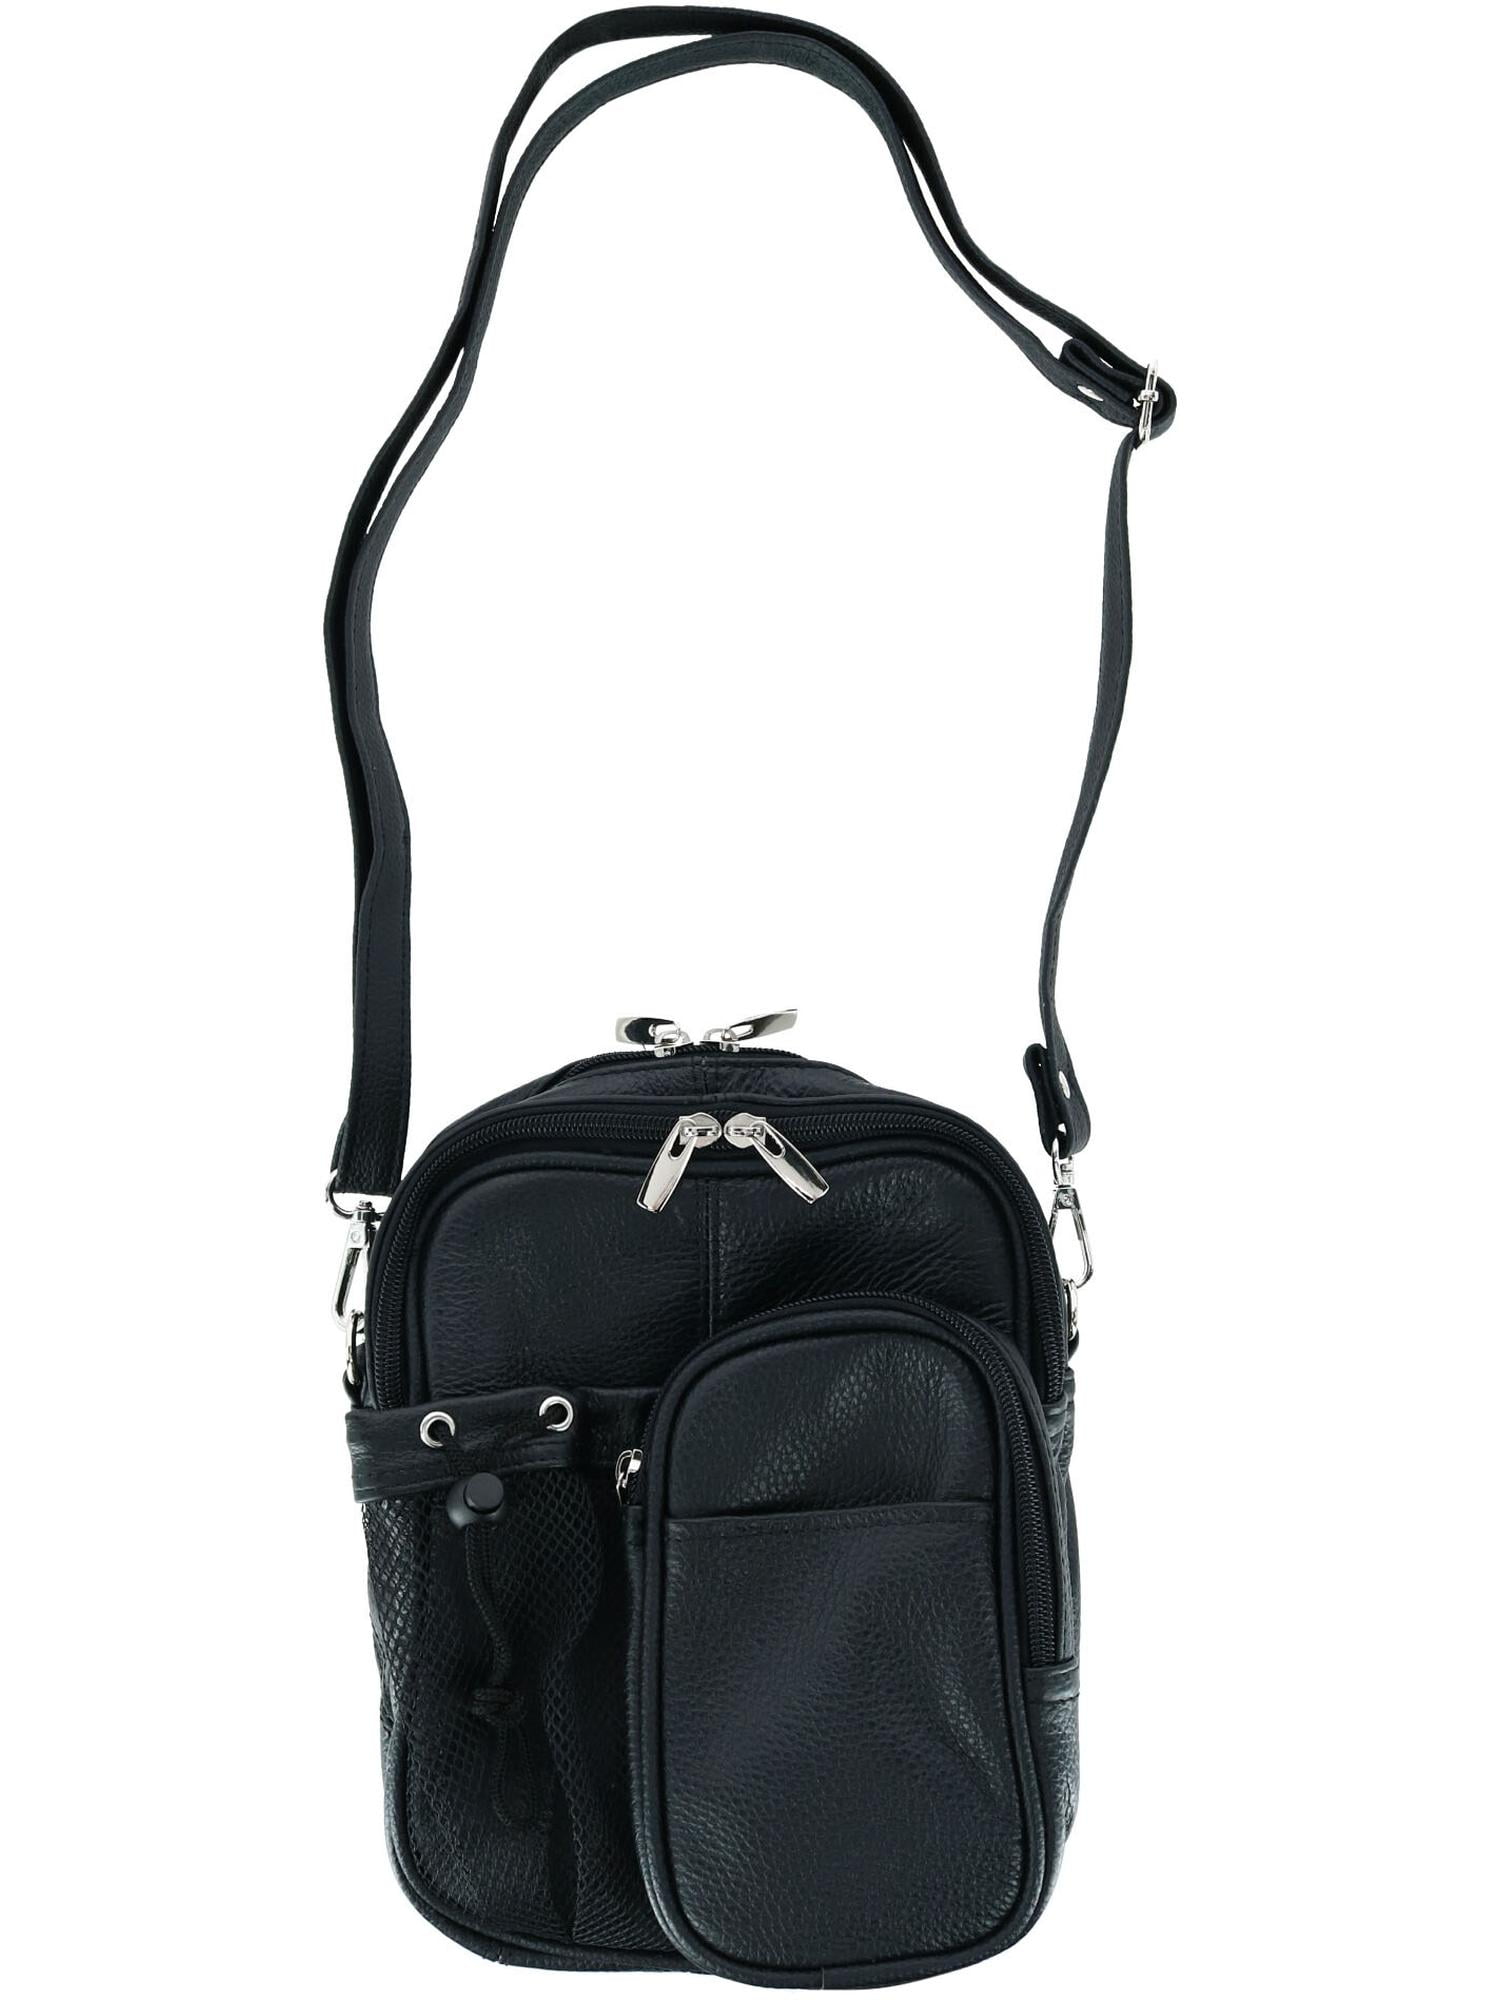 CTM Leather Crossbody Handbag with Phone Bottle Pockets - Walmart.com